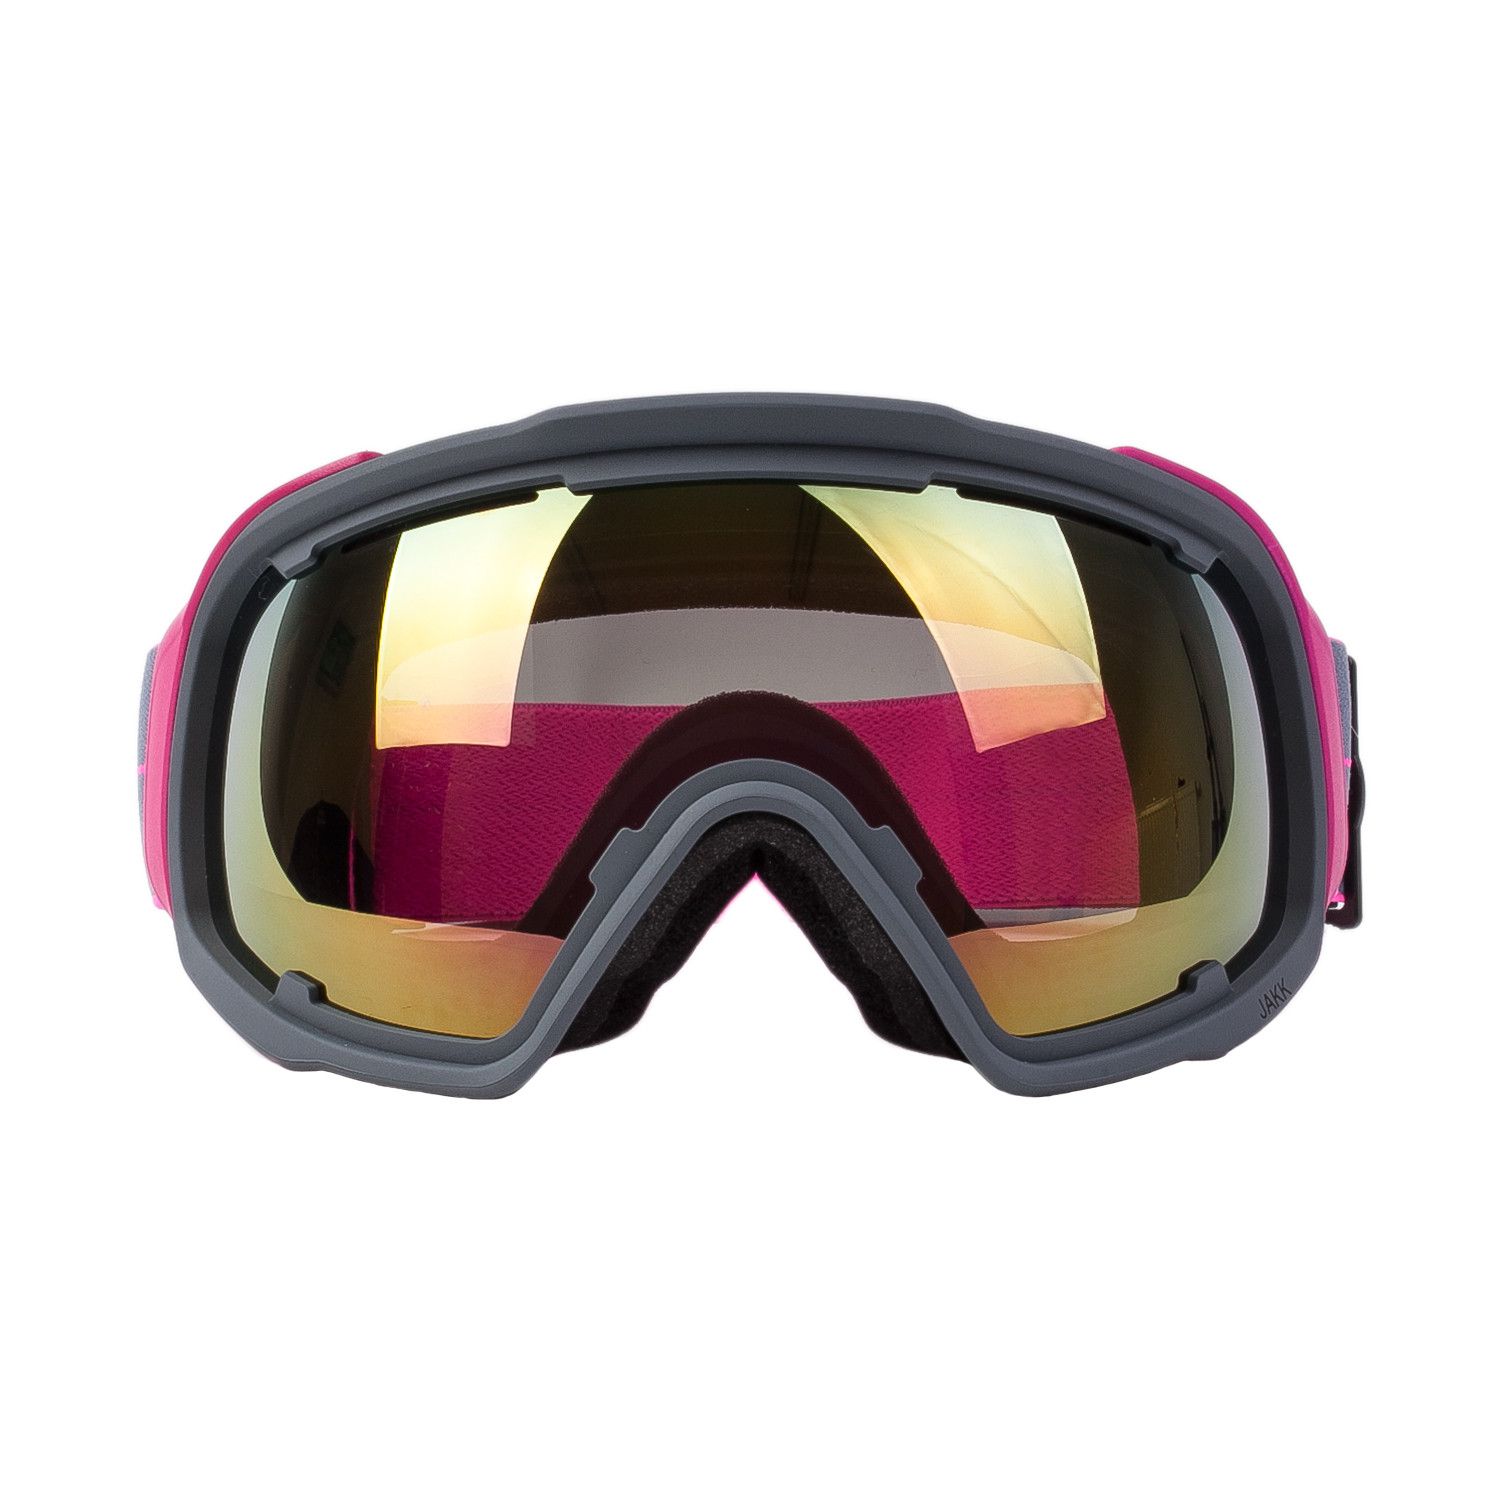 Uvex Jakk Sphere лыжные очки